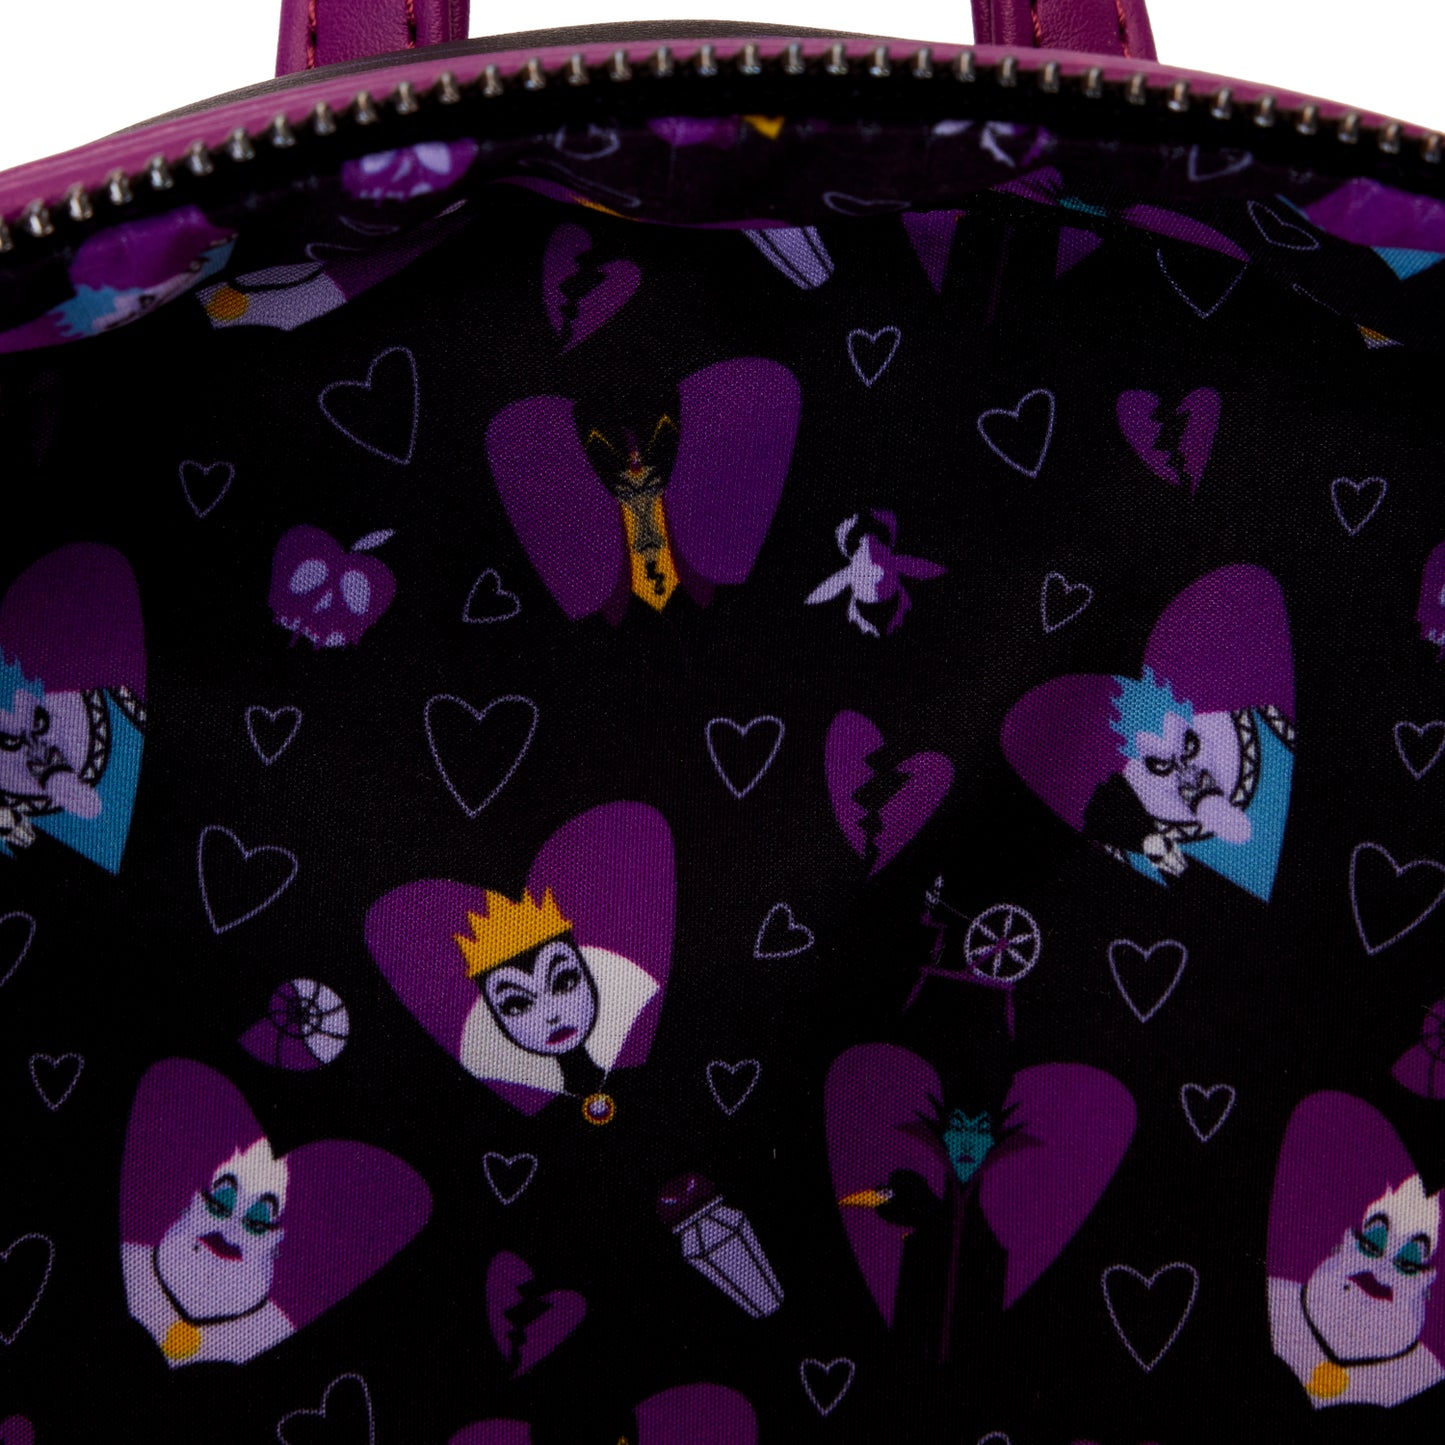 Disney Villains Curse Your Hearts Mini Backpack LFY